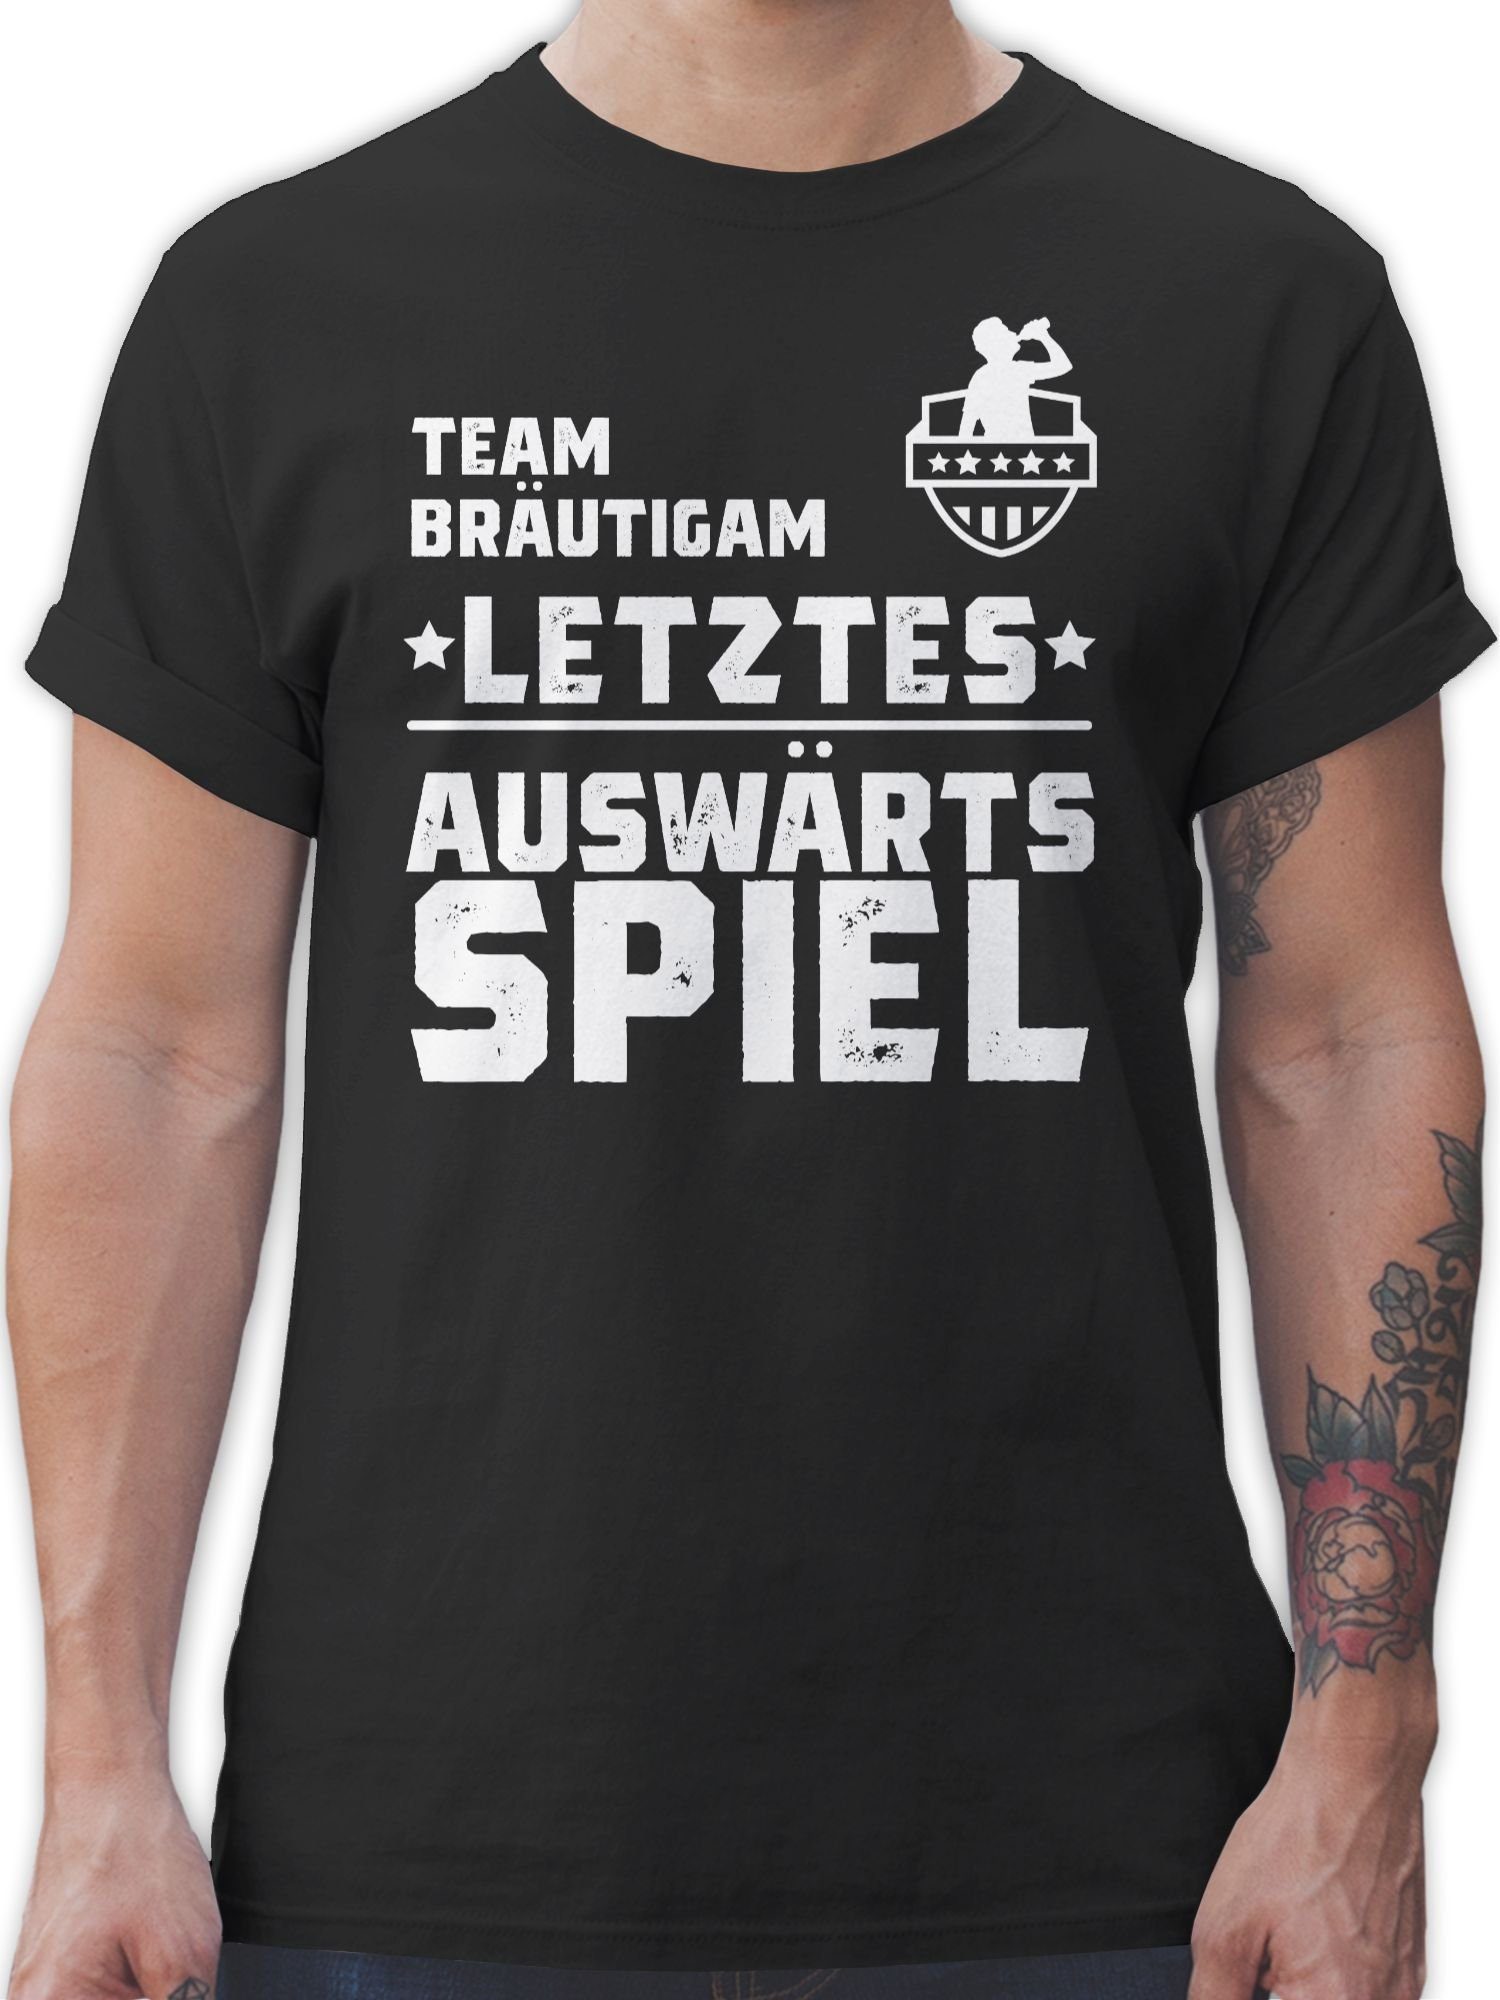 Shirtracer T-Shirt Team Bräutigam - Letztes Auswärtsspiel Auswärtstour -  JGA Männer - Herren Premium T-Shirt männer tshirt letzte auswärtstour -  team groom shirt - t-shirt jga